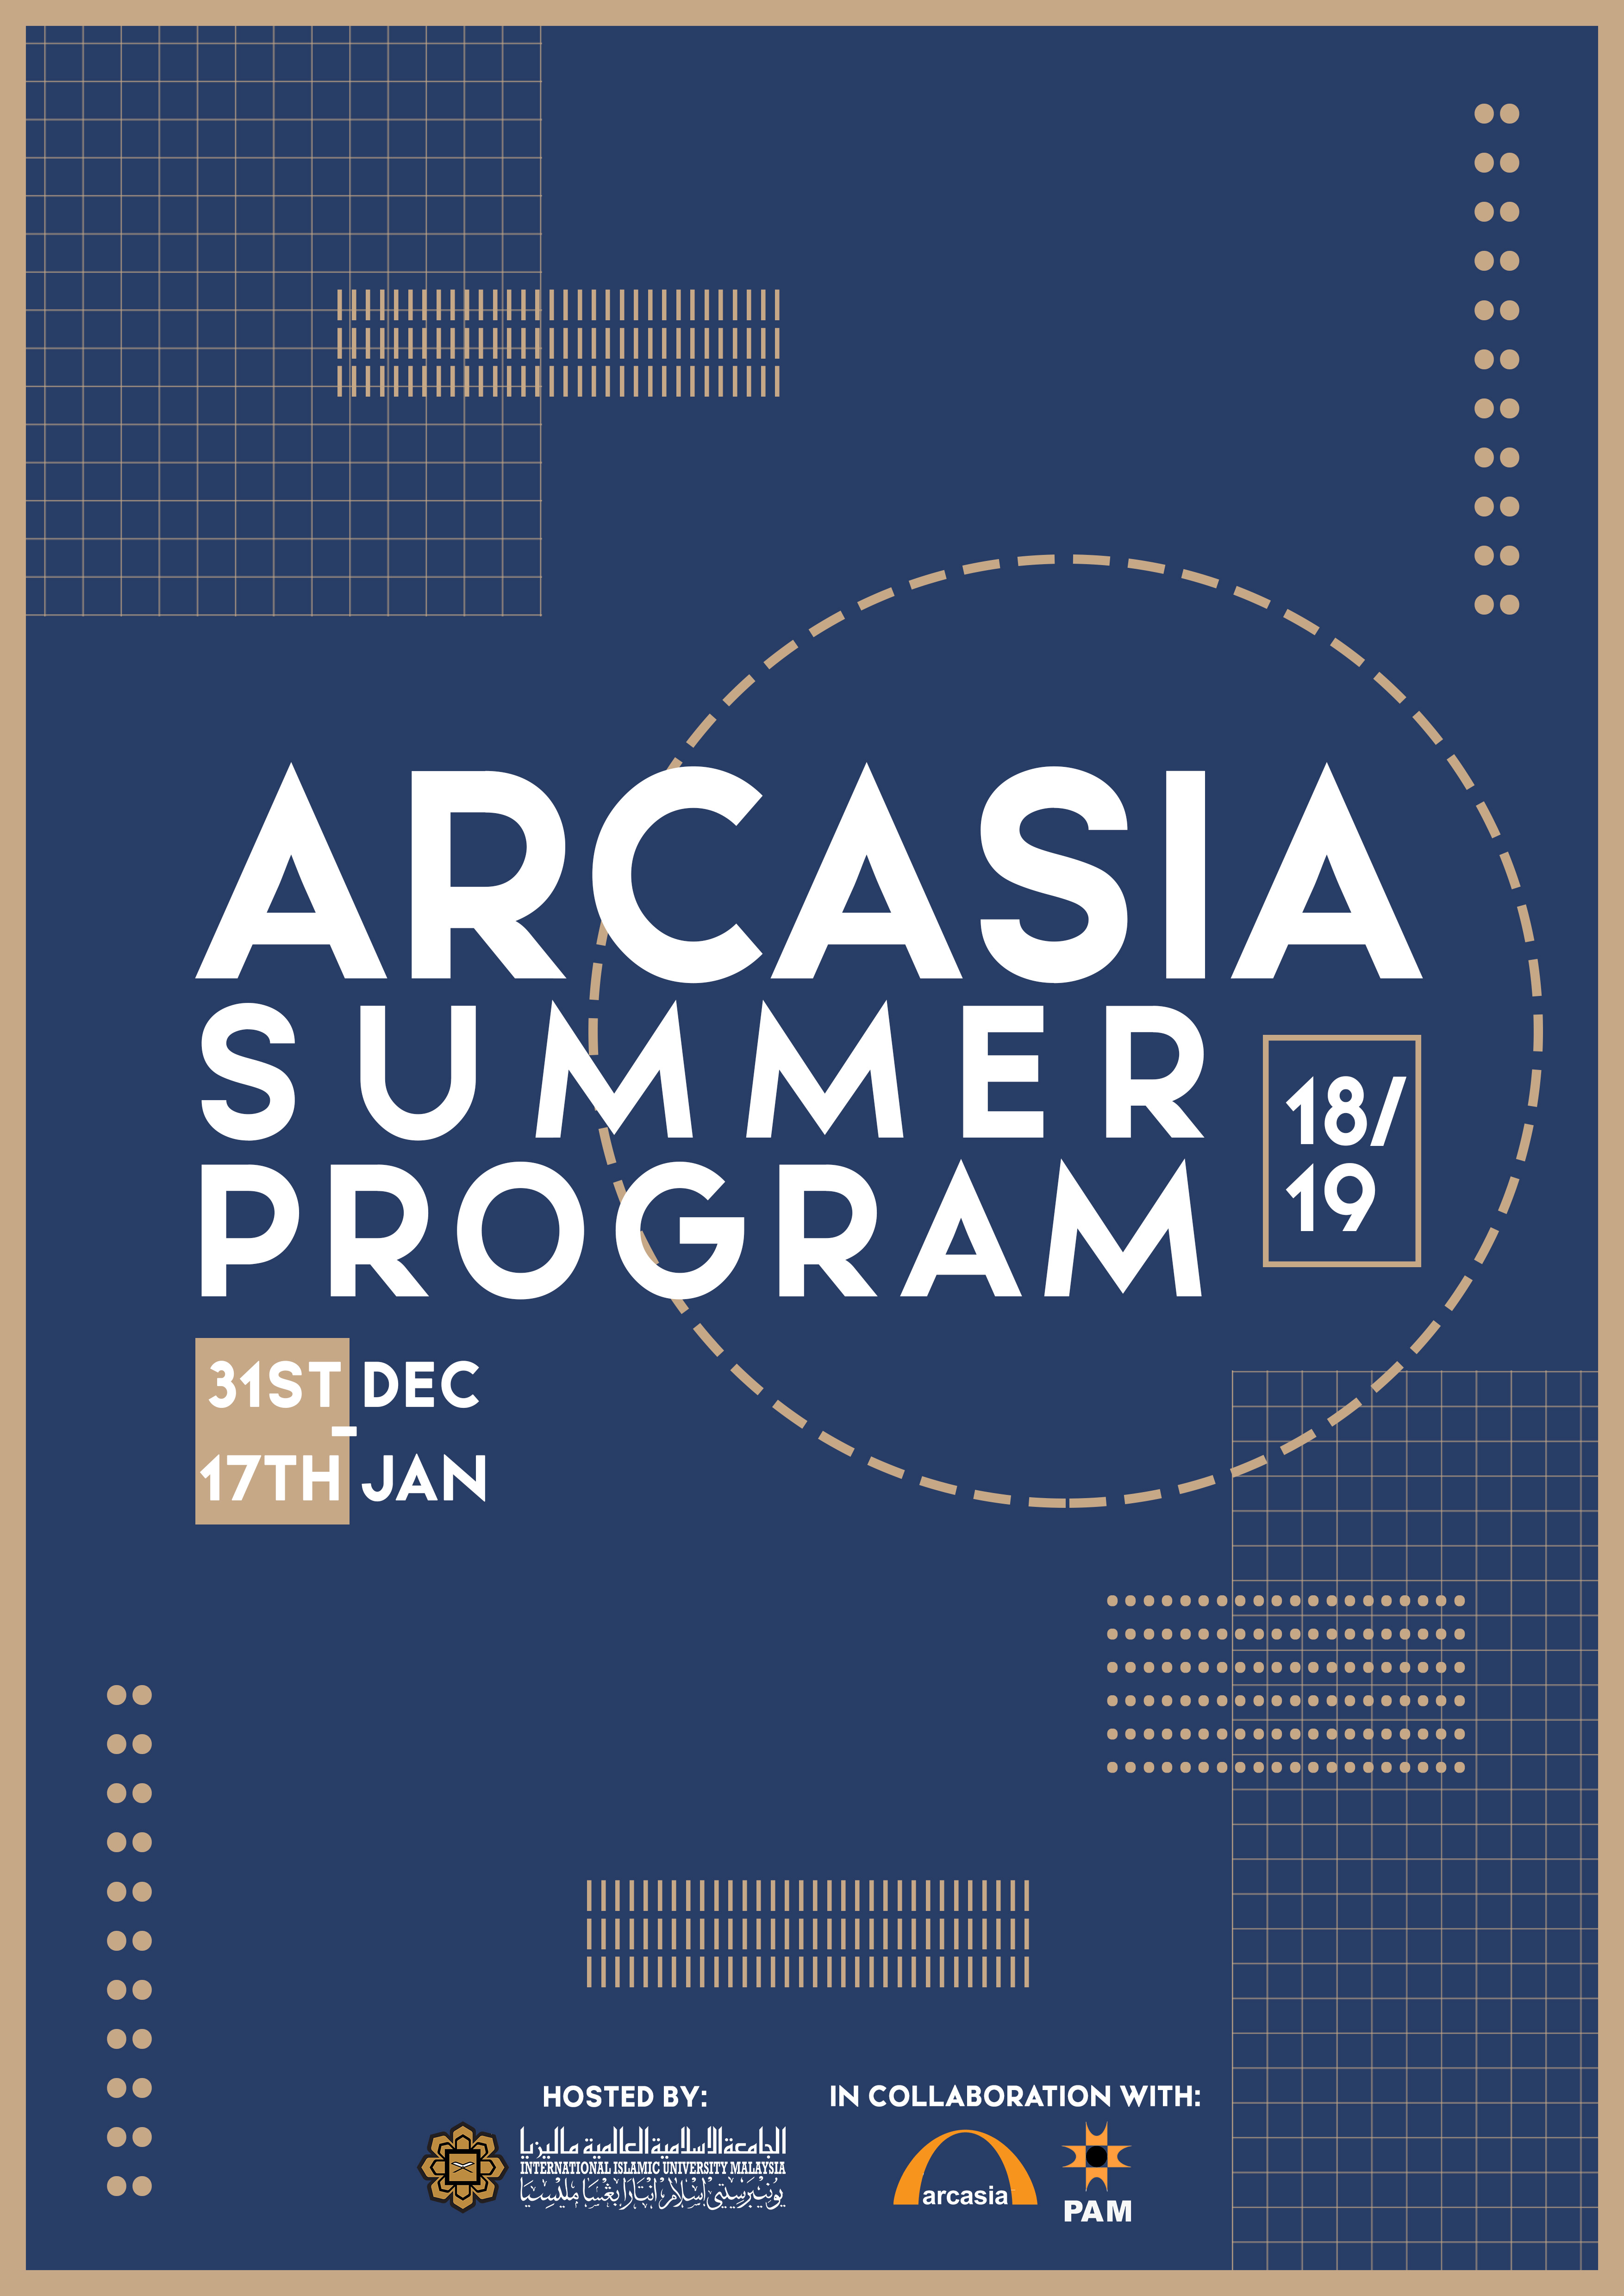 Arcasia Summer Program 18/19